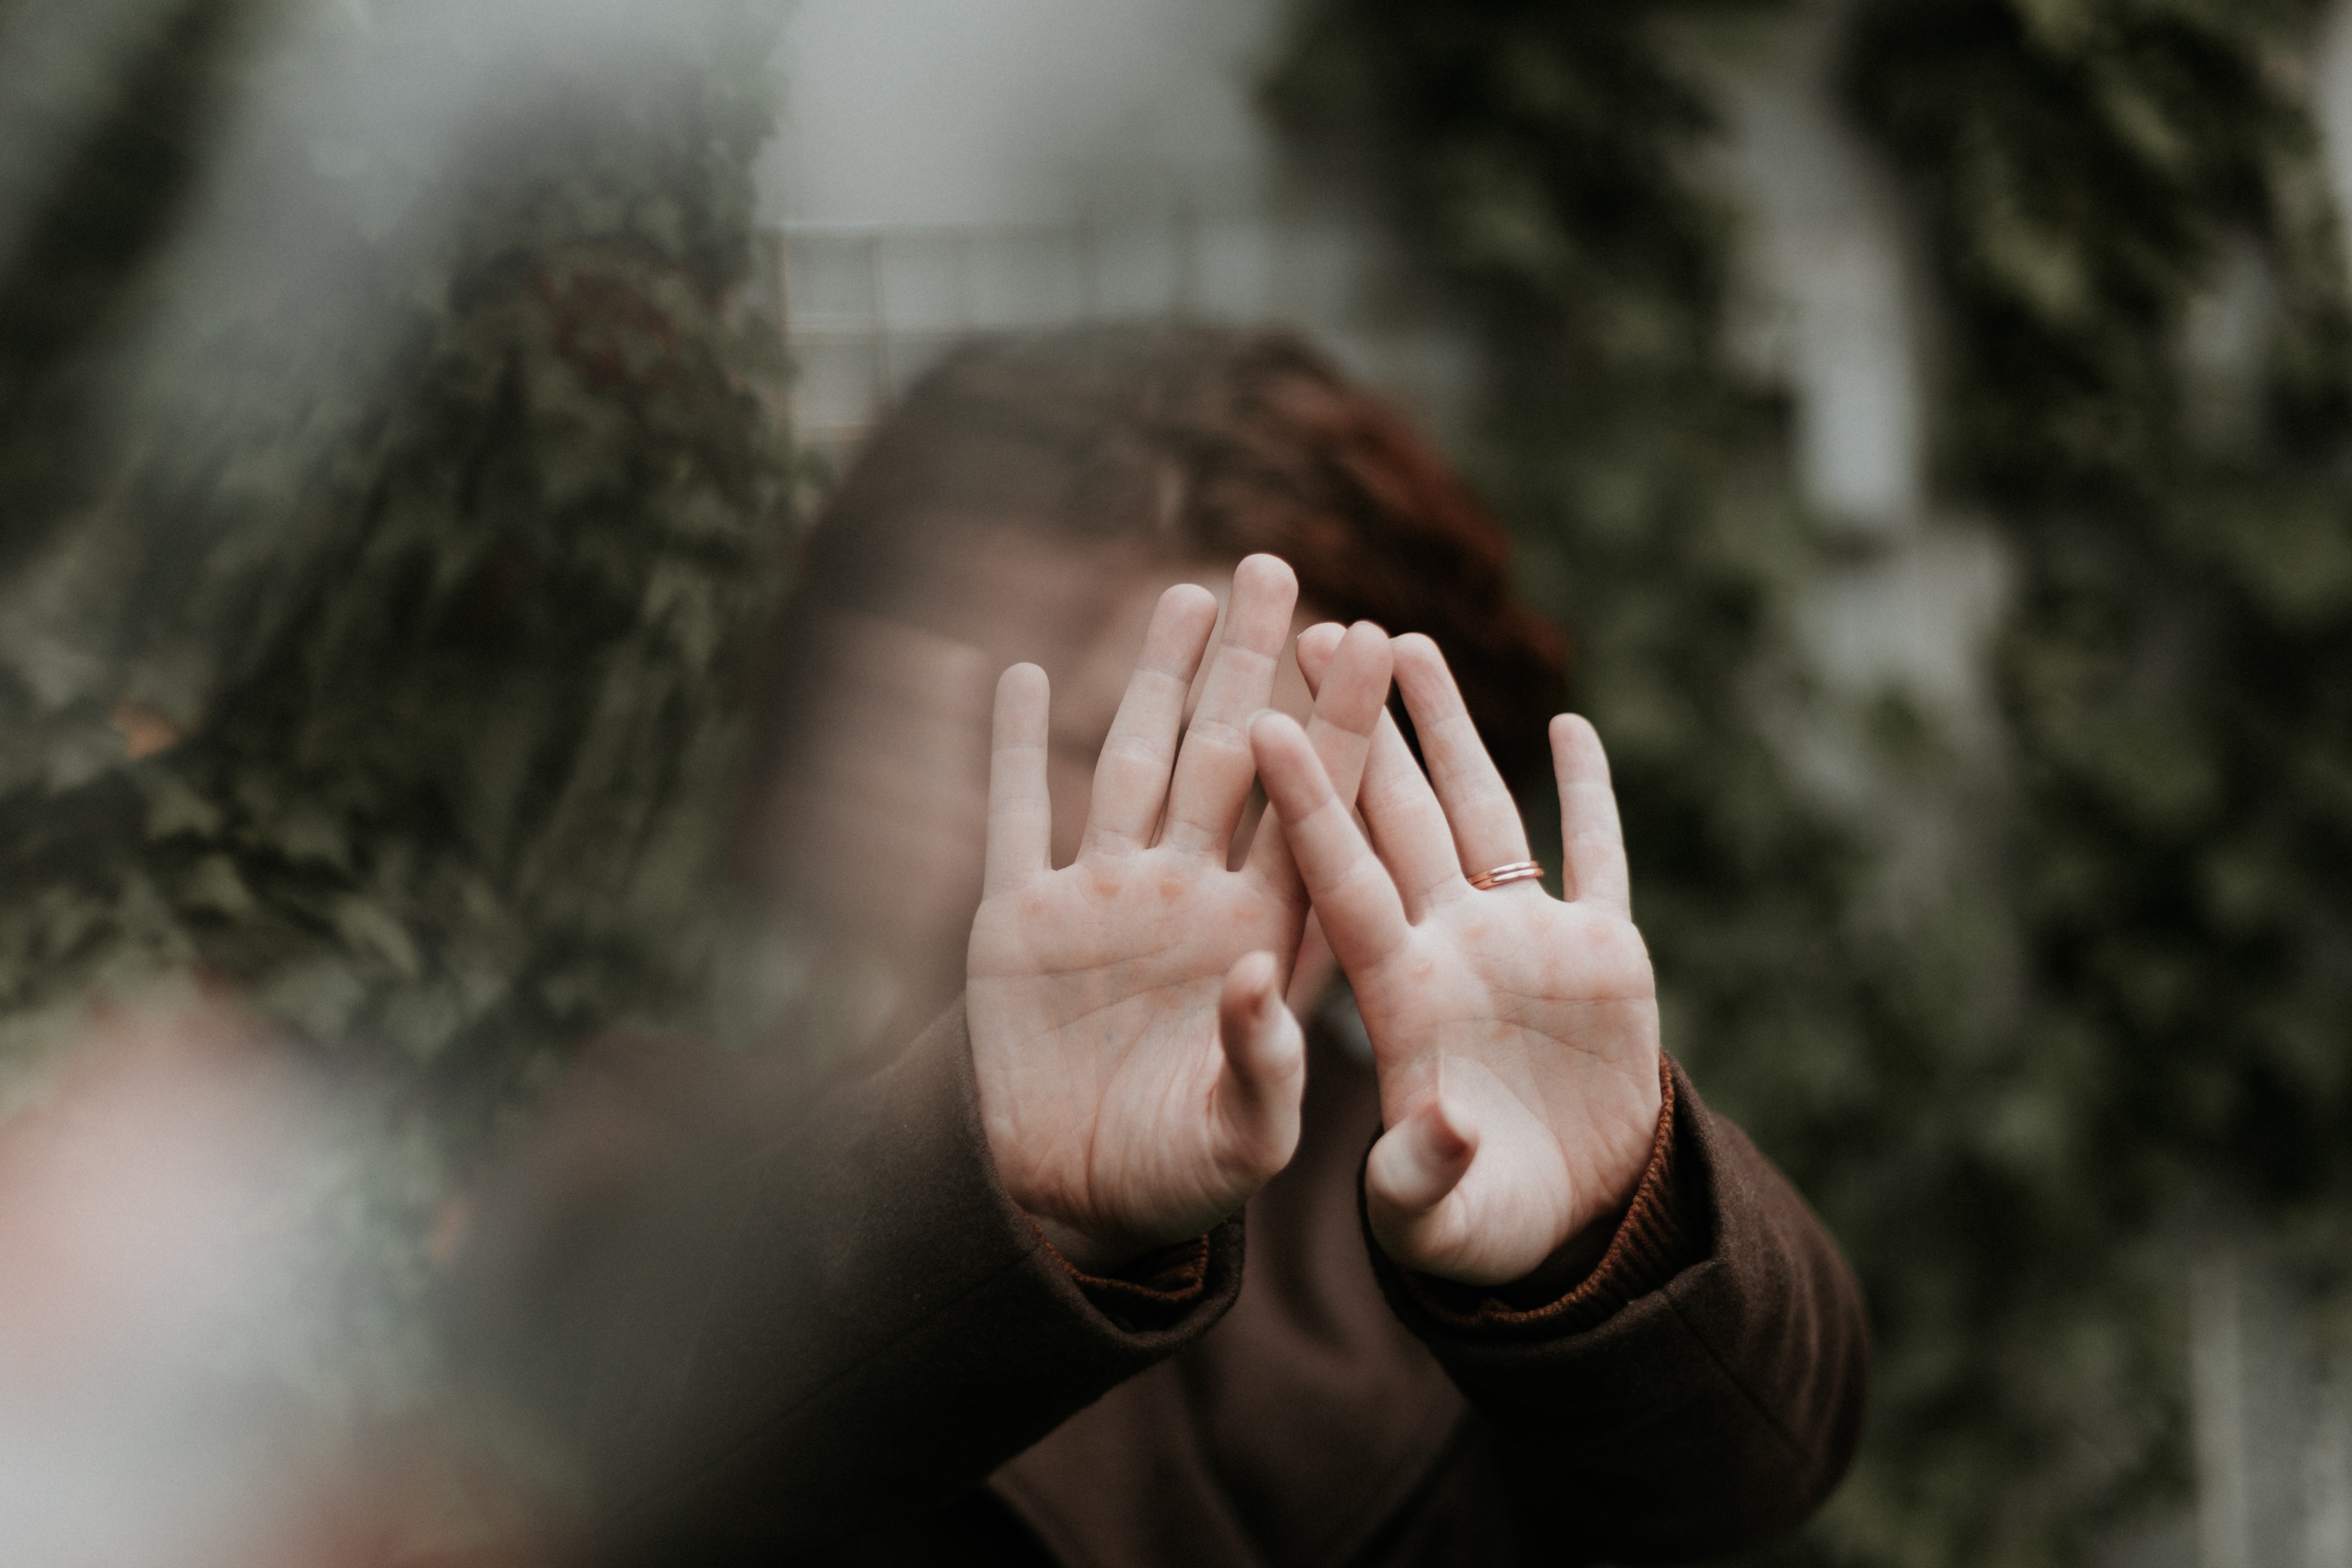 Woman holding her hands out, hiding her face; image by Priscilla Du Preez, via Unsplash.com.